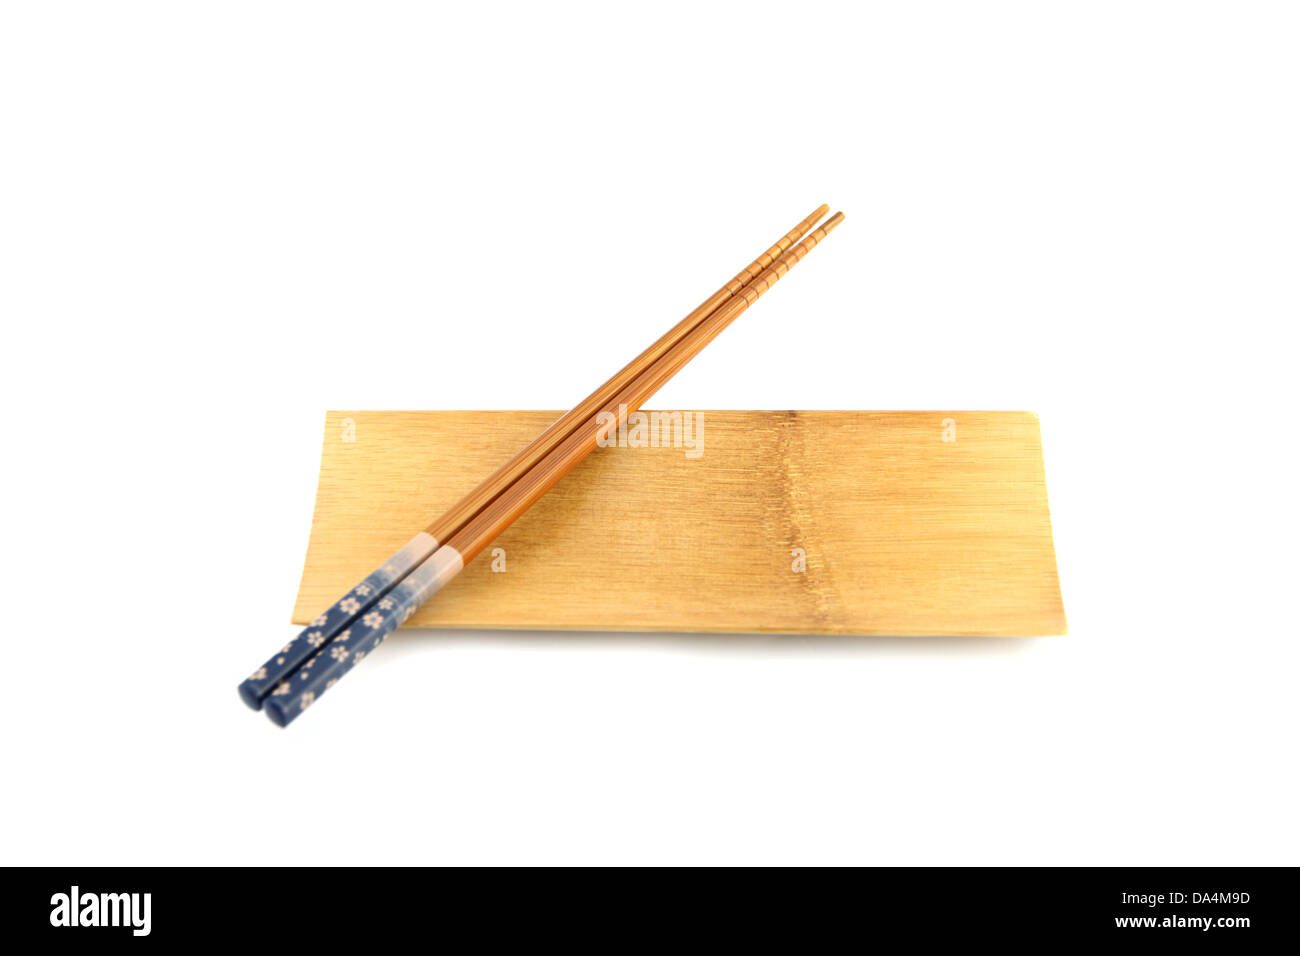 The Chopsticks in Bamboo dish. Stock Photo